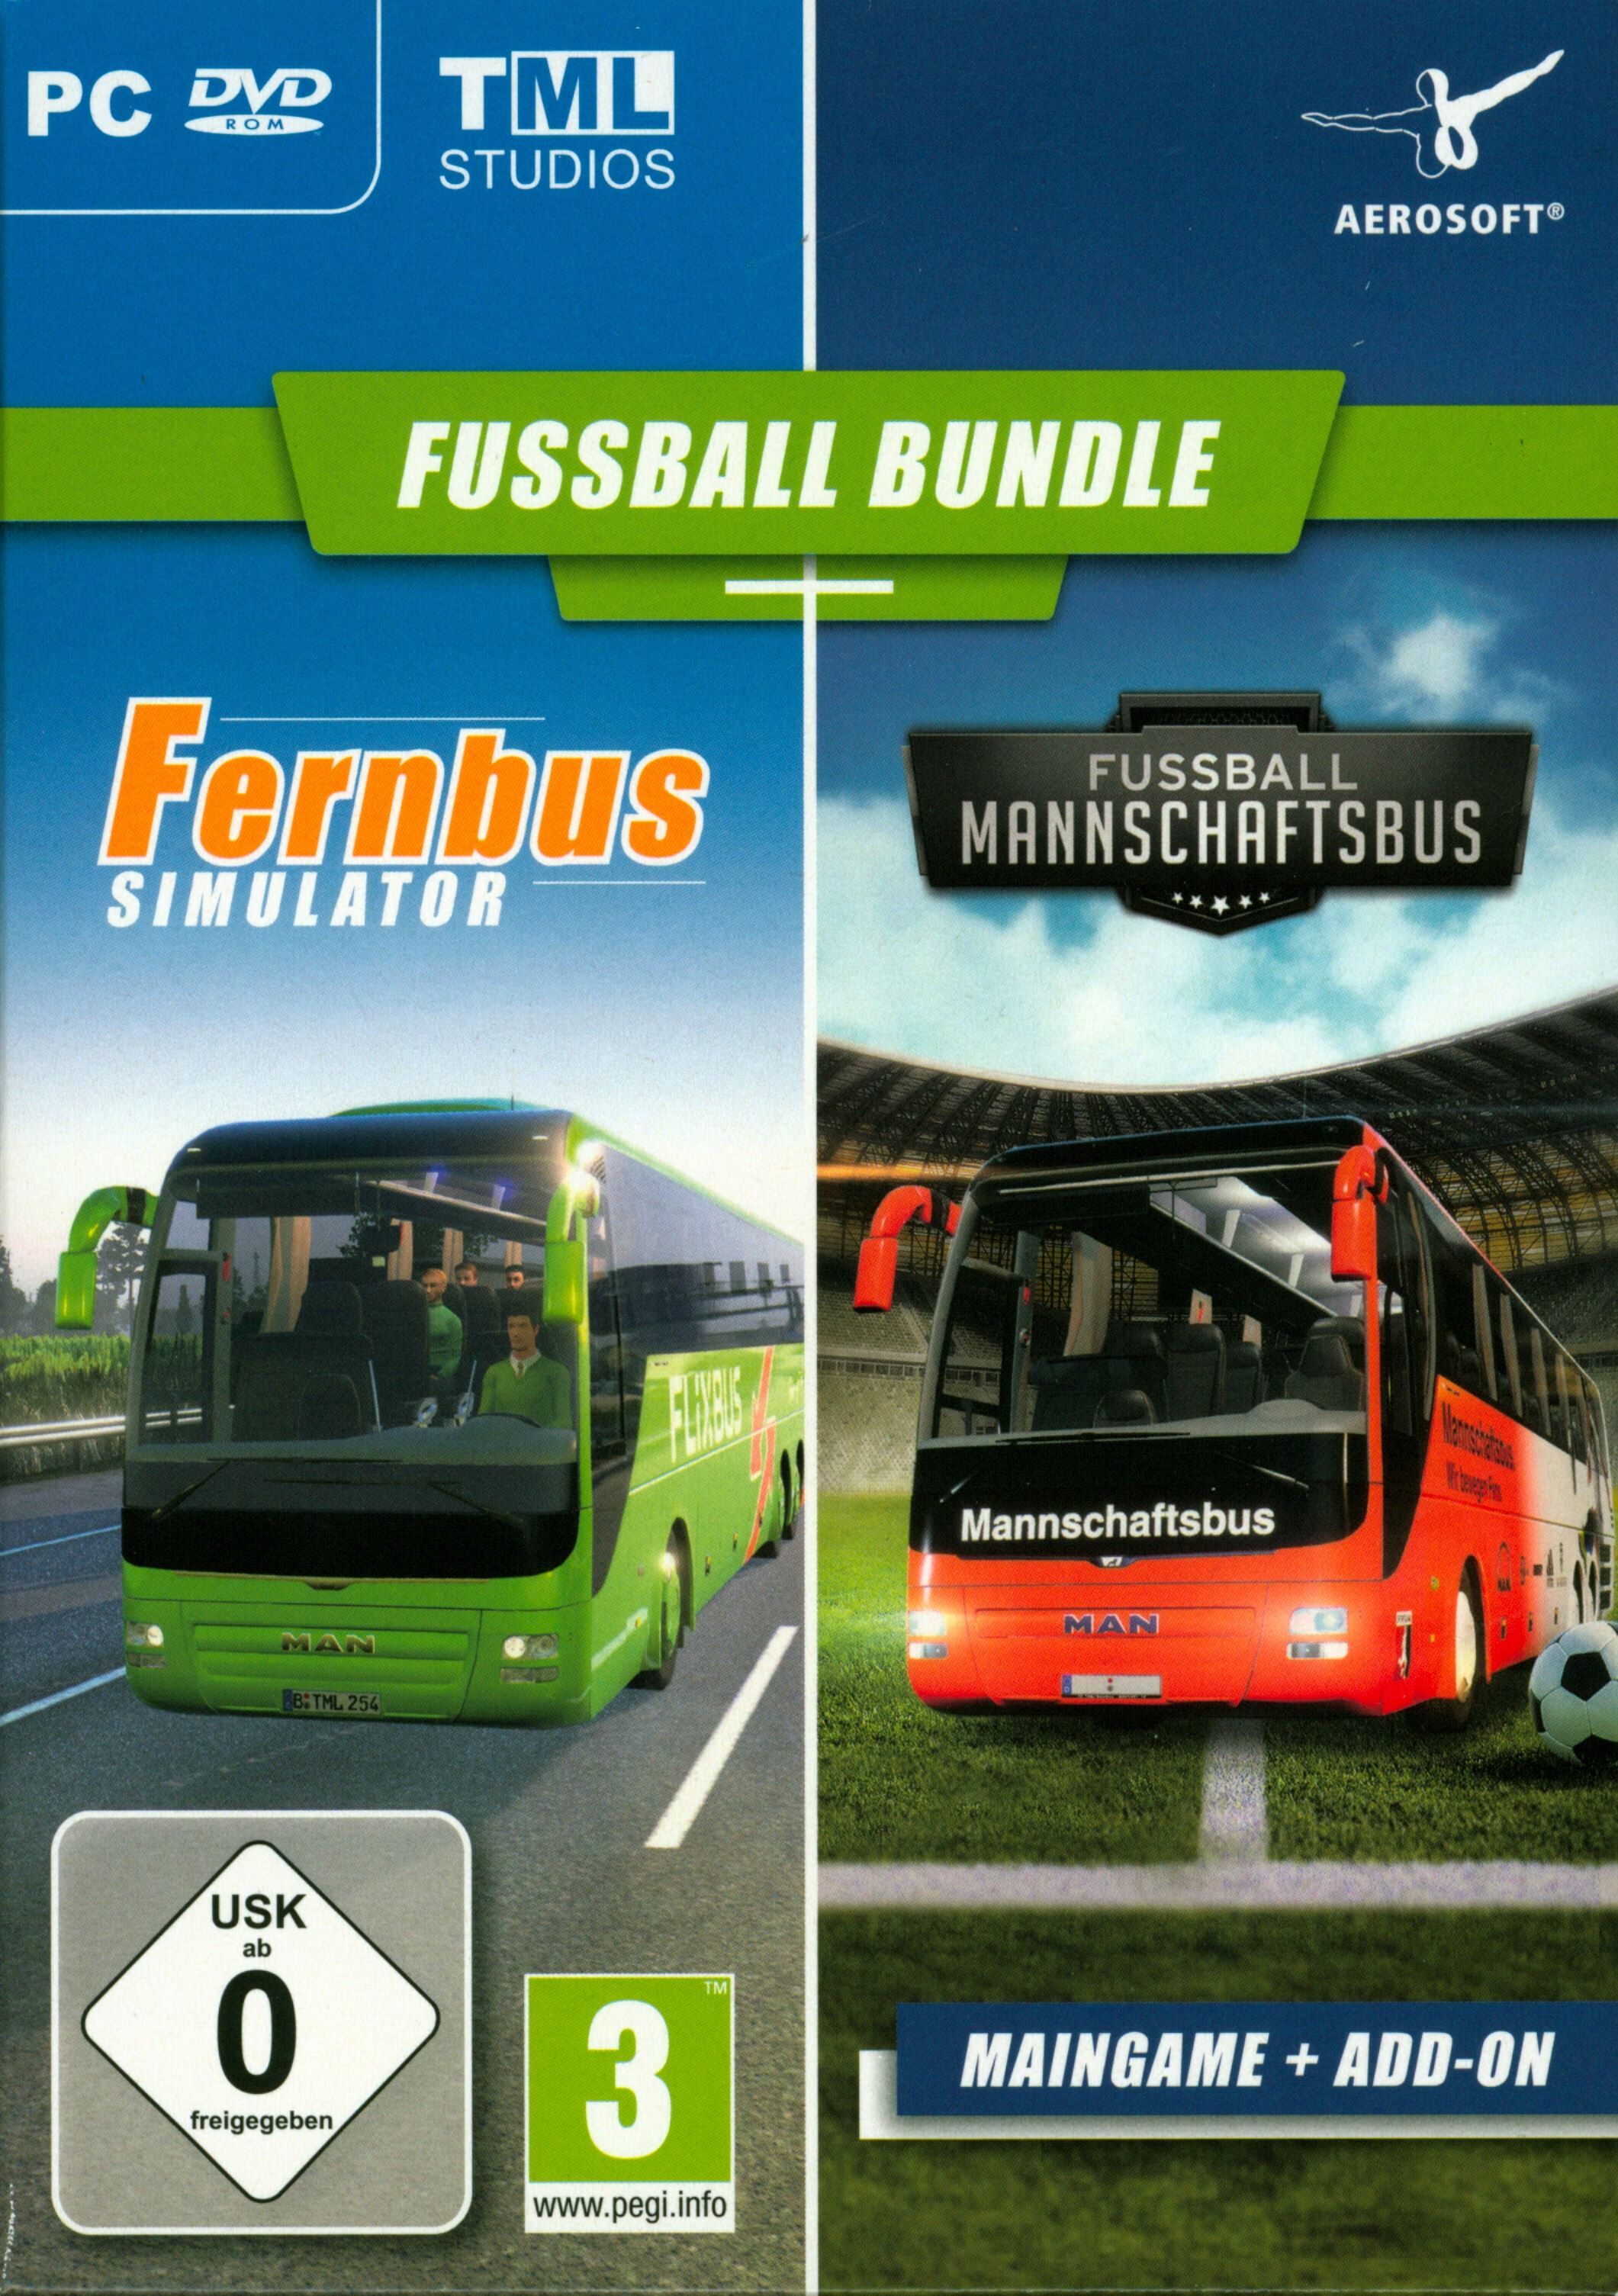 Aerosoft - Fernbus Simulator + Fussball Mannschaftsbus - Bundle [DVD] [PC] (D)